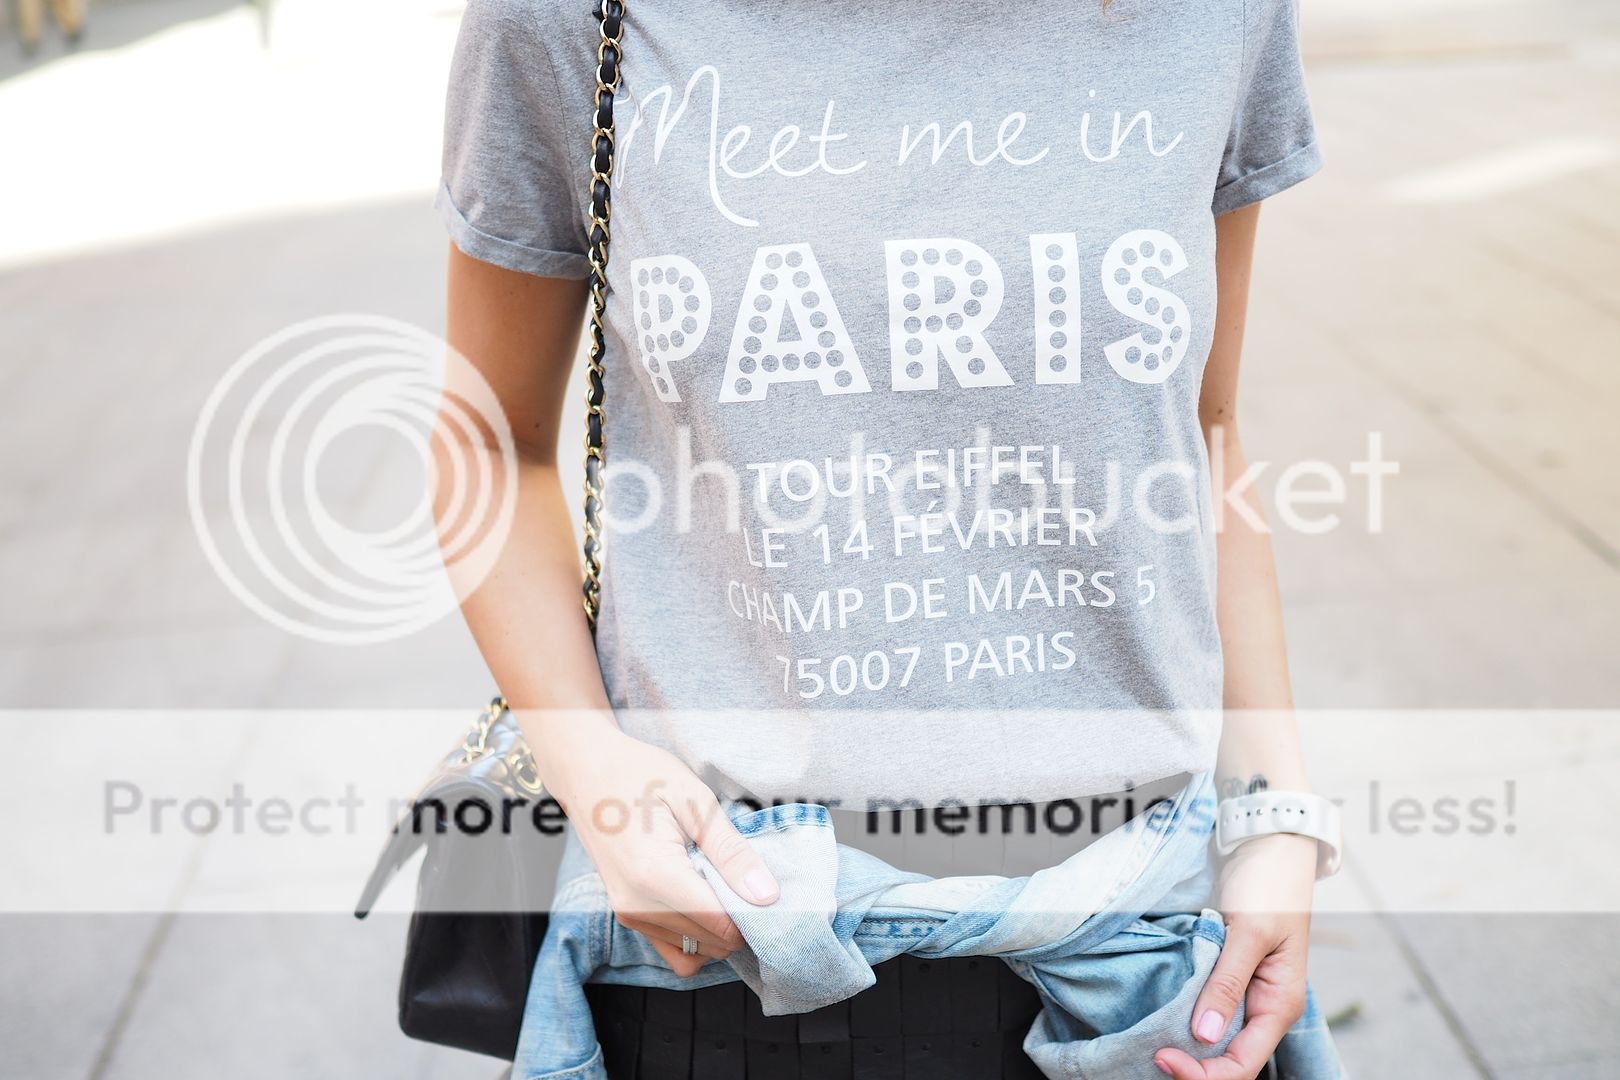  photo meet me in Paris a bicyclette fashion street style.jpg